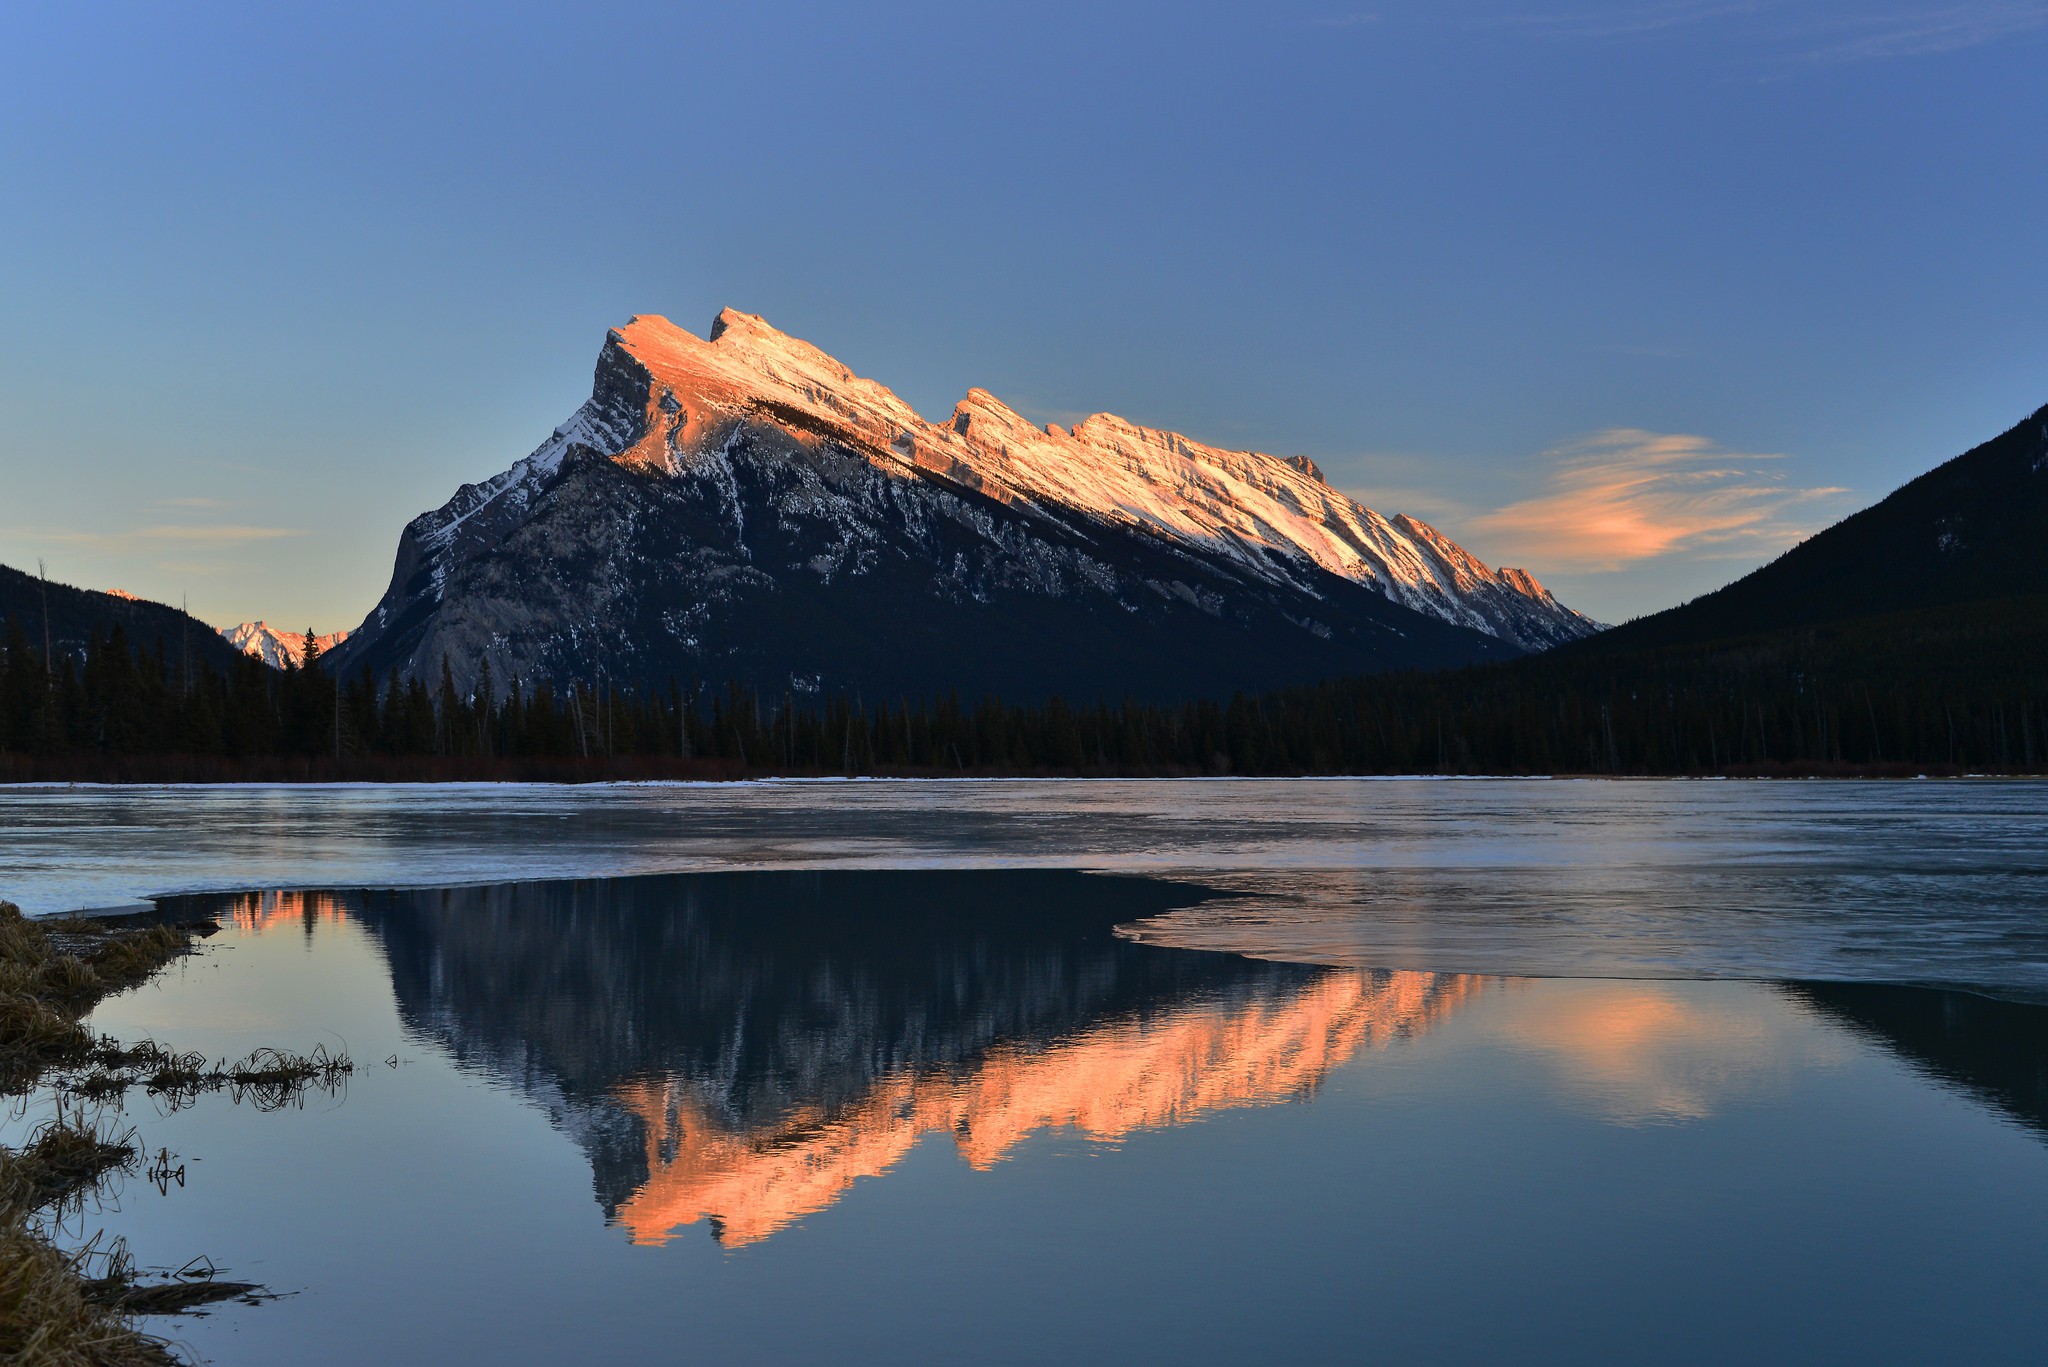 General 2048x1367 Banff National Park Banff Canada nature landscape sunlight water reflection mountains calm